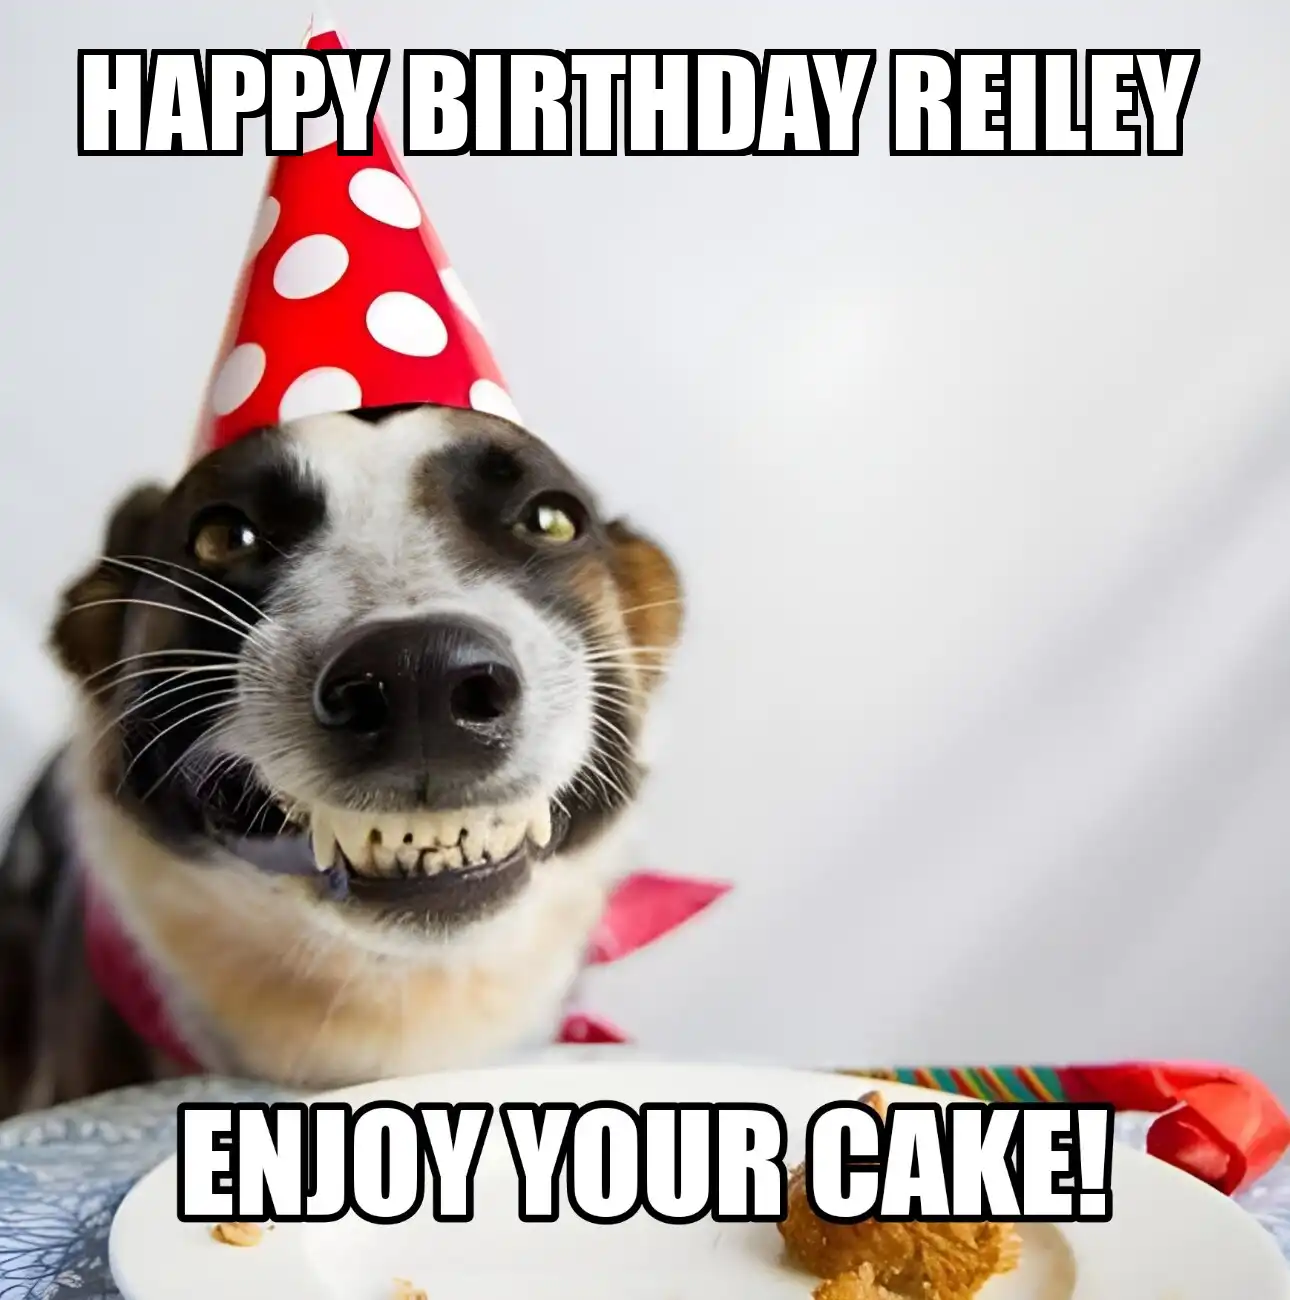 Happy Birthday Reiley Enjoy Your Cake Dog Meme